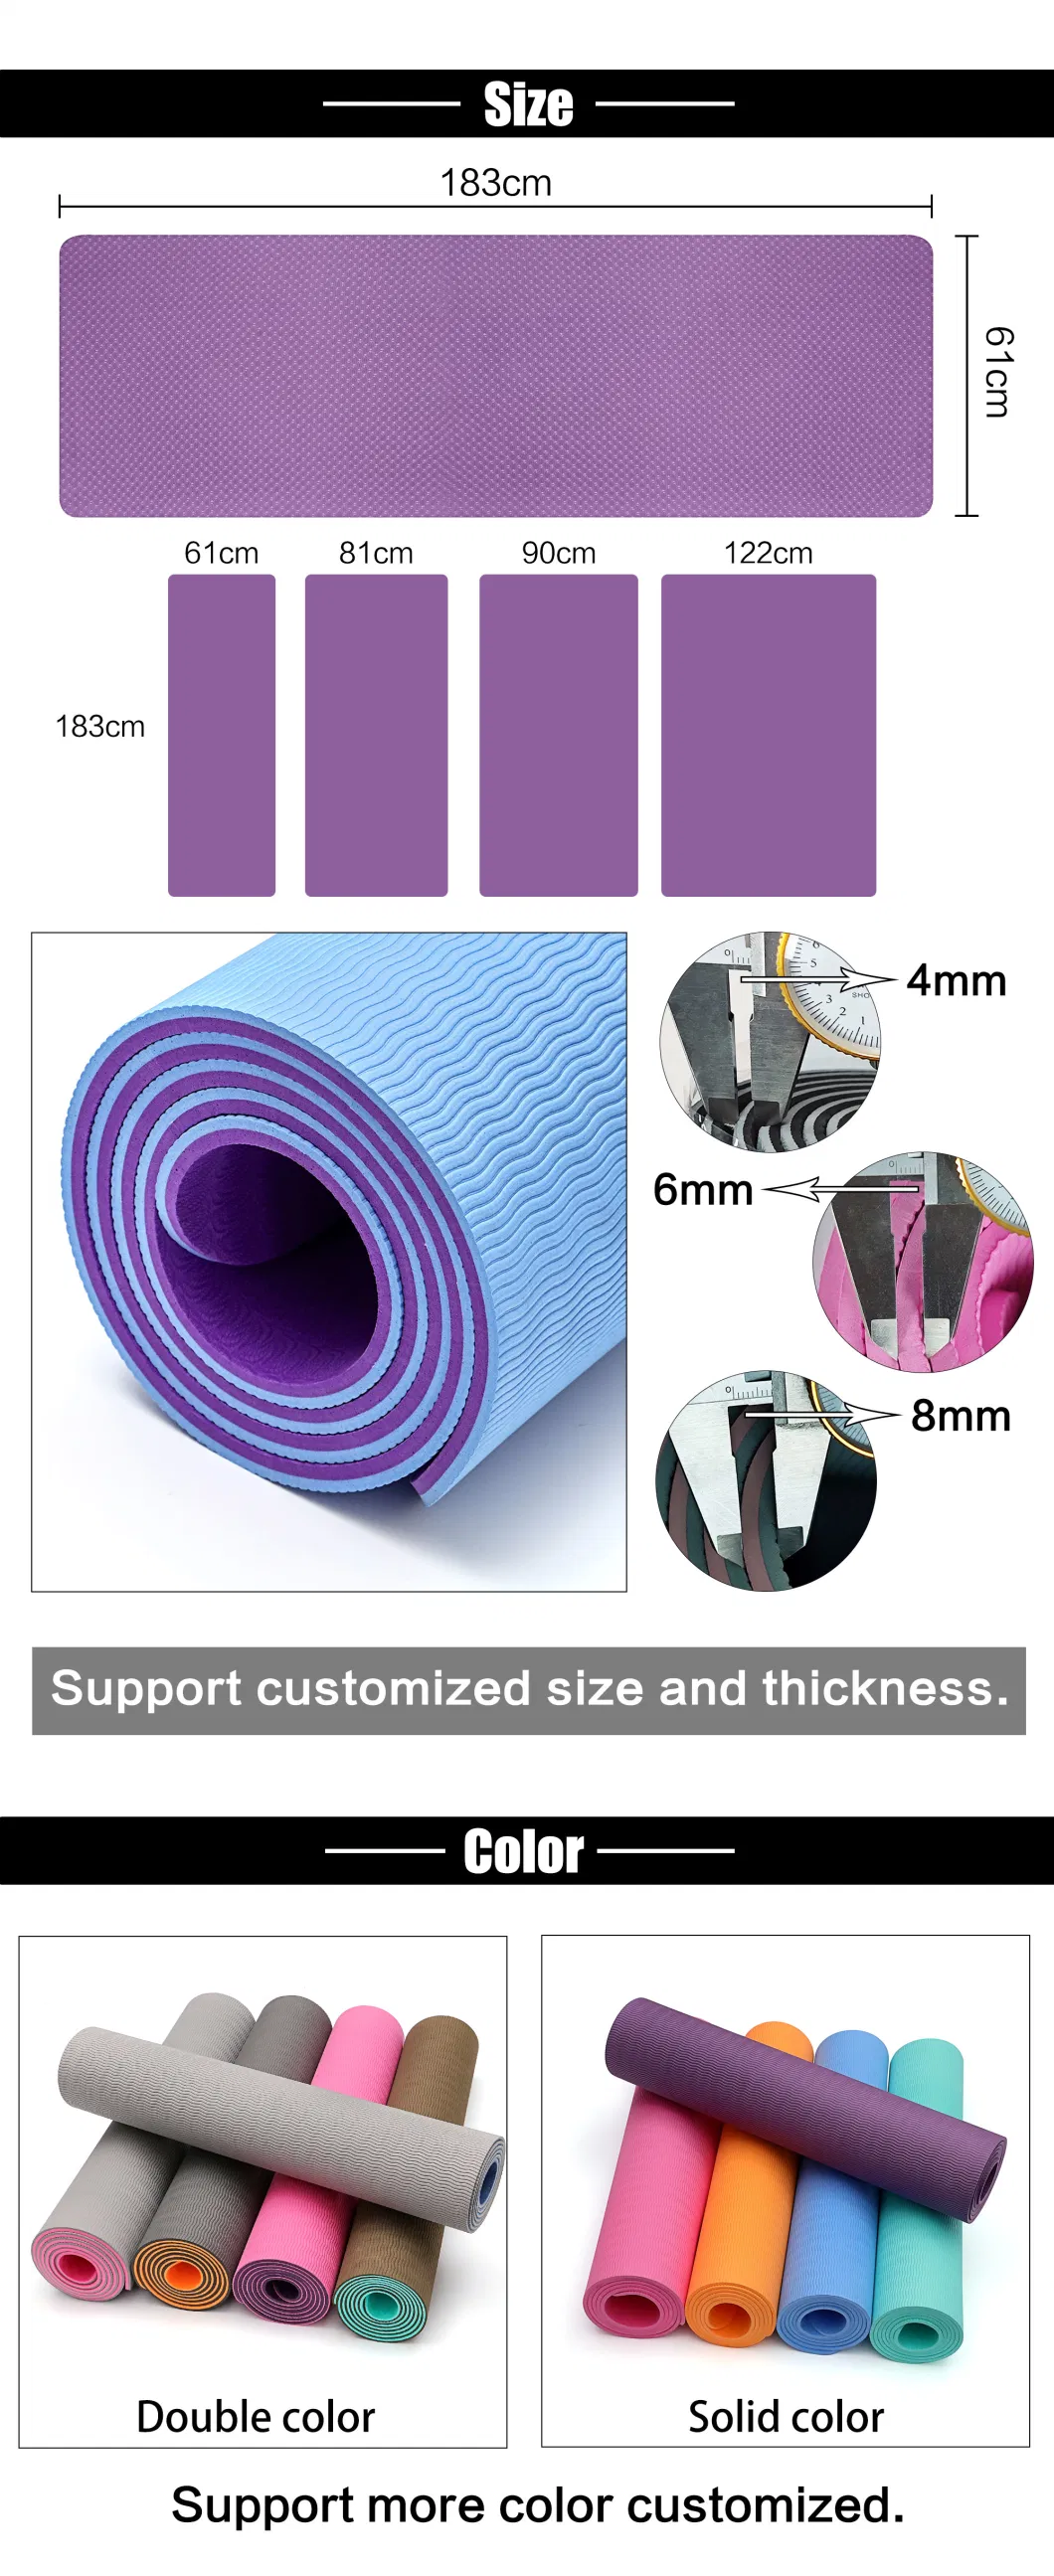 Super Elastic Anti-Tear Mesh Sandwich Yoga Mat TPE Material Perform Excellent in Anti-Slip